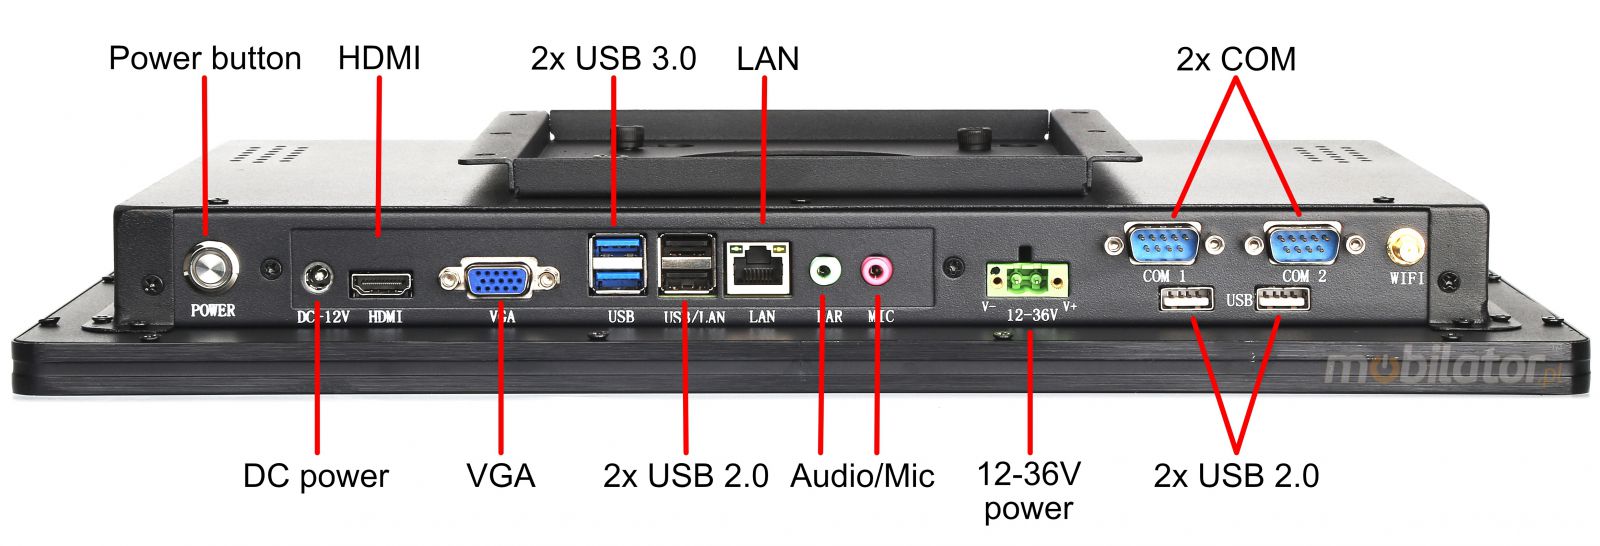 BIBOX-185PC2 connectors: 2x USB 3.0 | 2x USB 2.0 | 2x COM | 2x LAN 1x VGA | 1x HDMI | DC 12V